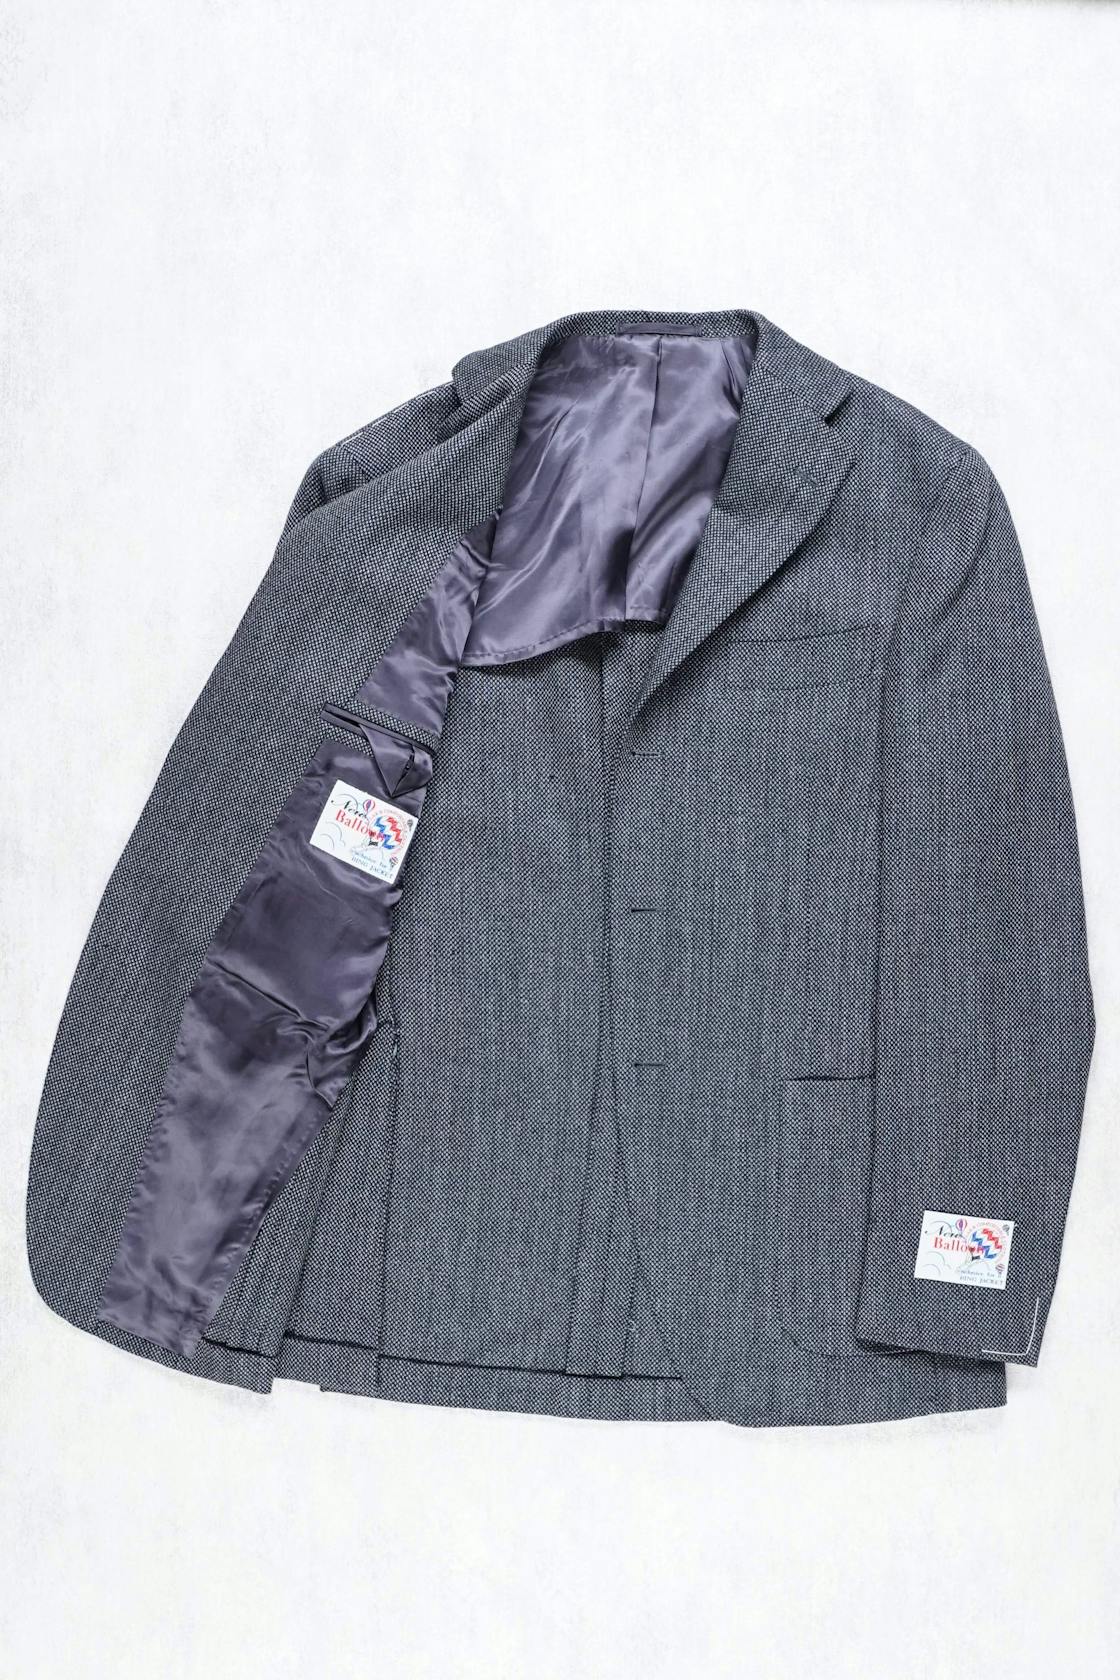 Ring Jacket 184 Mid-Grey Wool Sport Coat